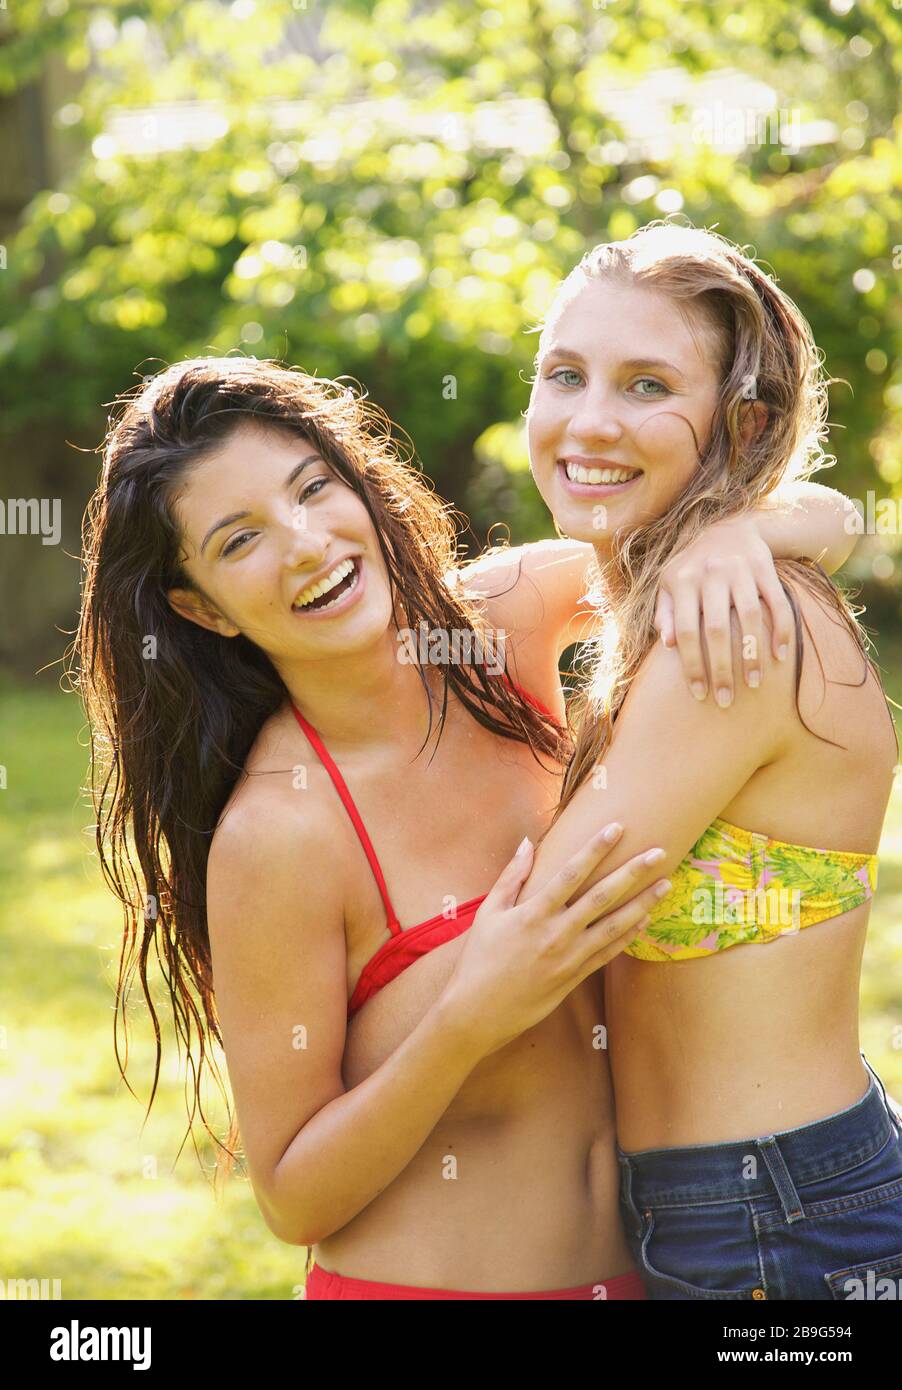 Bikini tops hi-res stock photography and images image